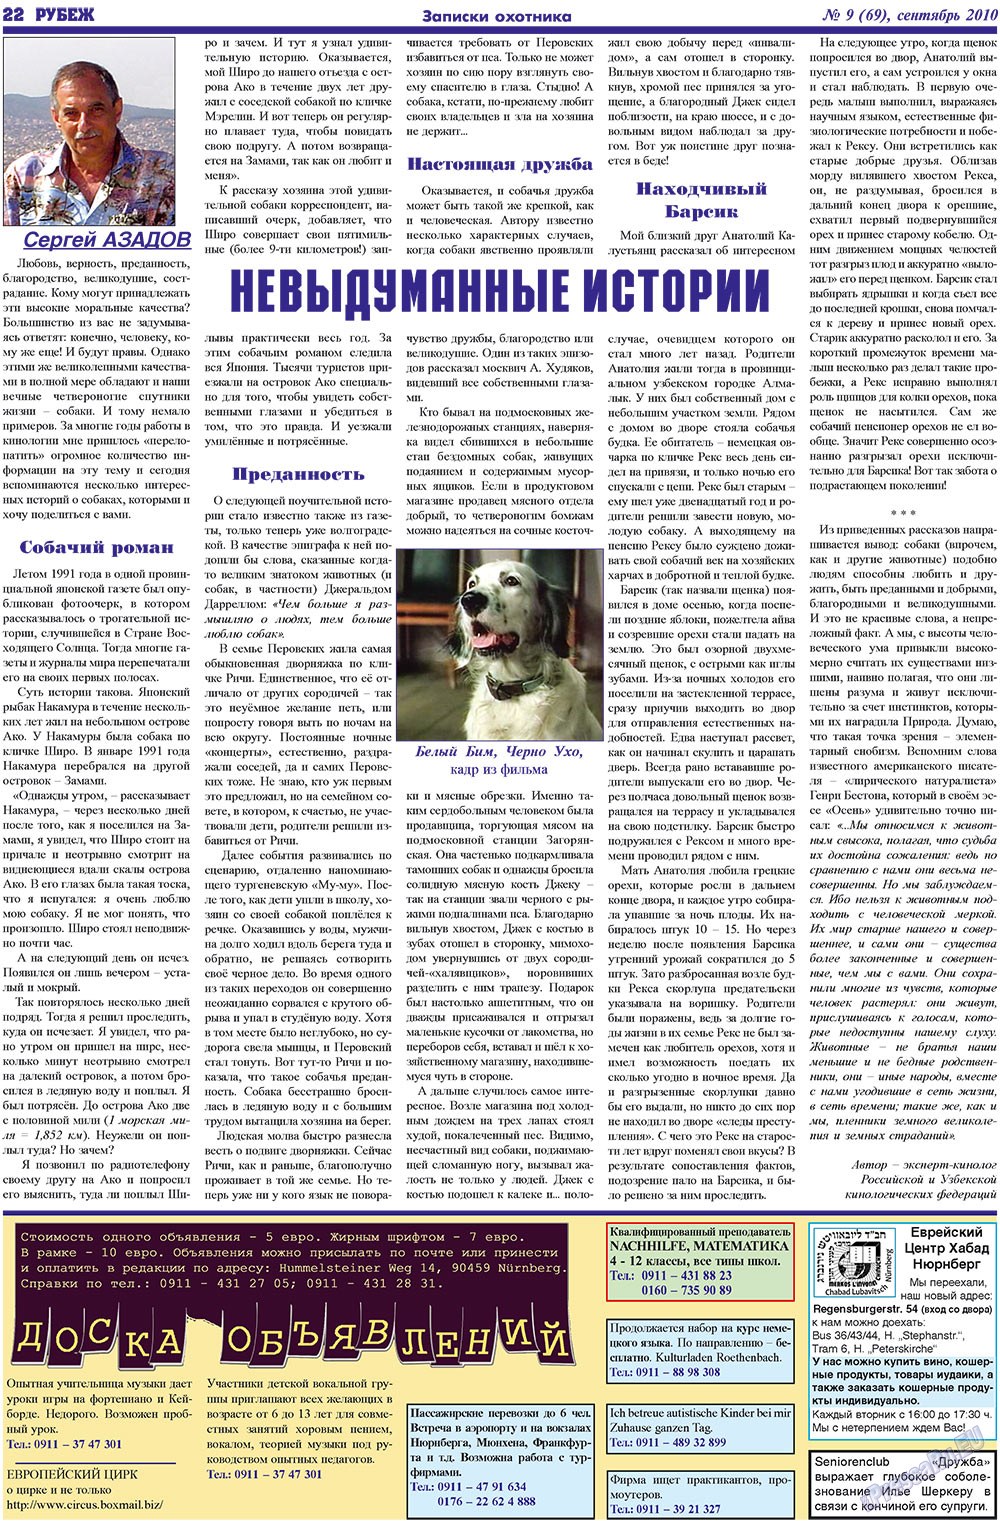 Рубеж, газета. 2010 №9 стр.22